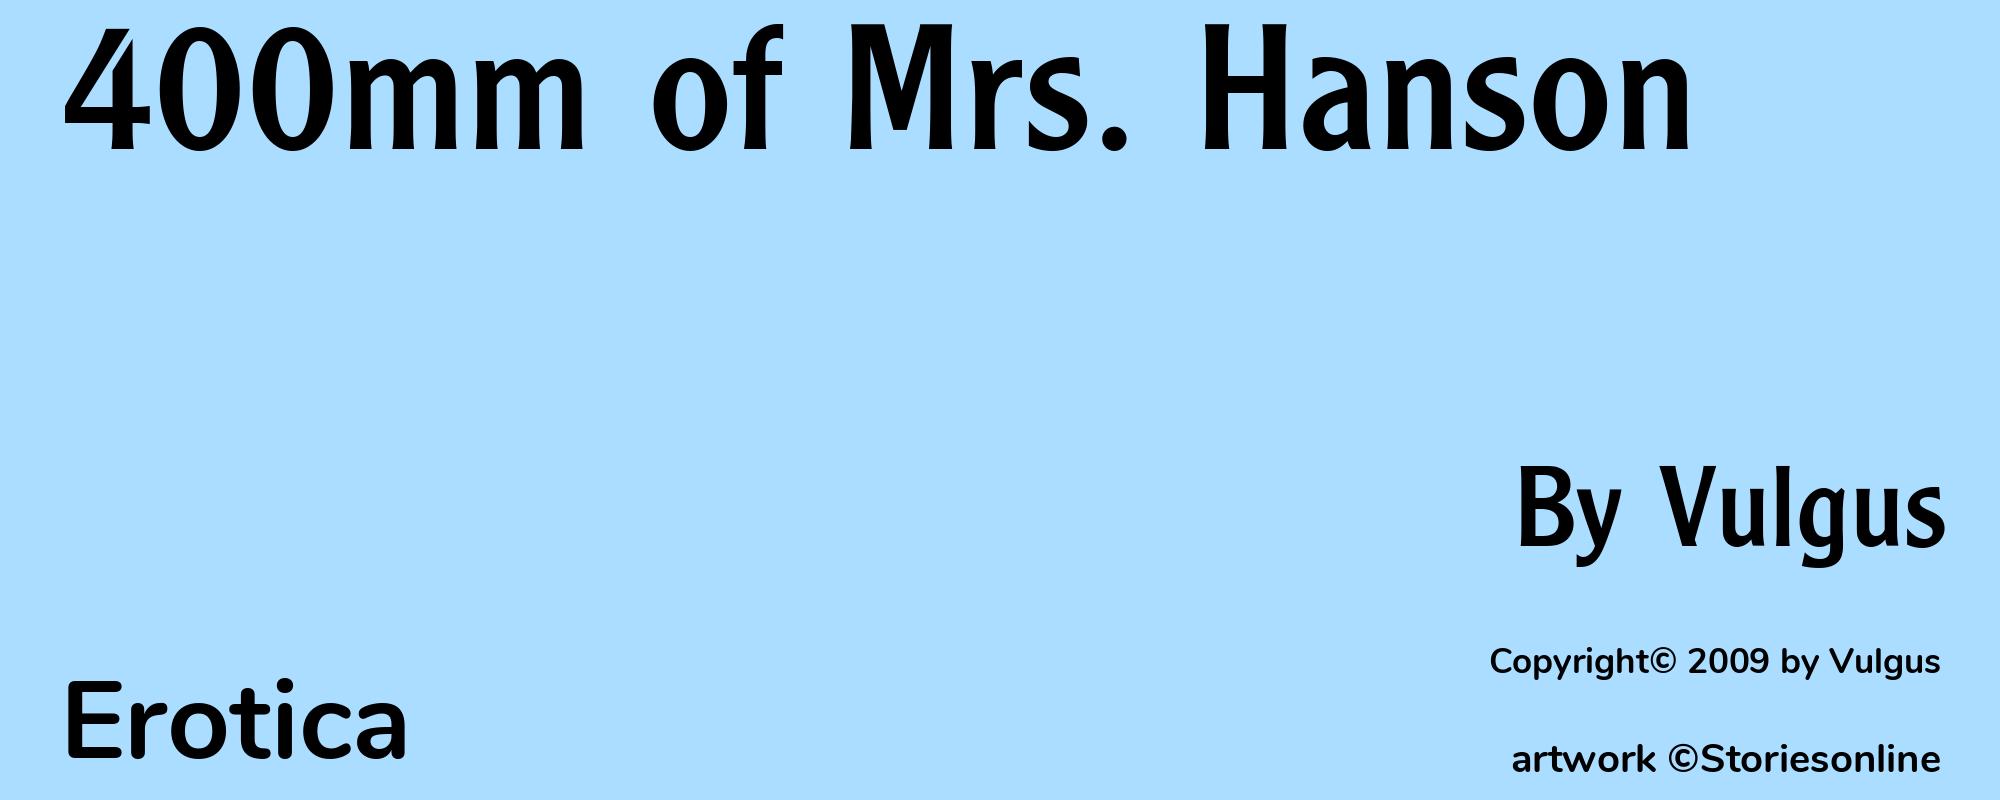 400mm of Mrs. Hanson - Cover